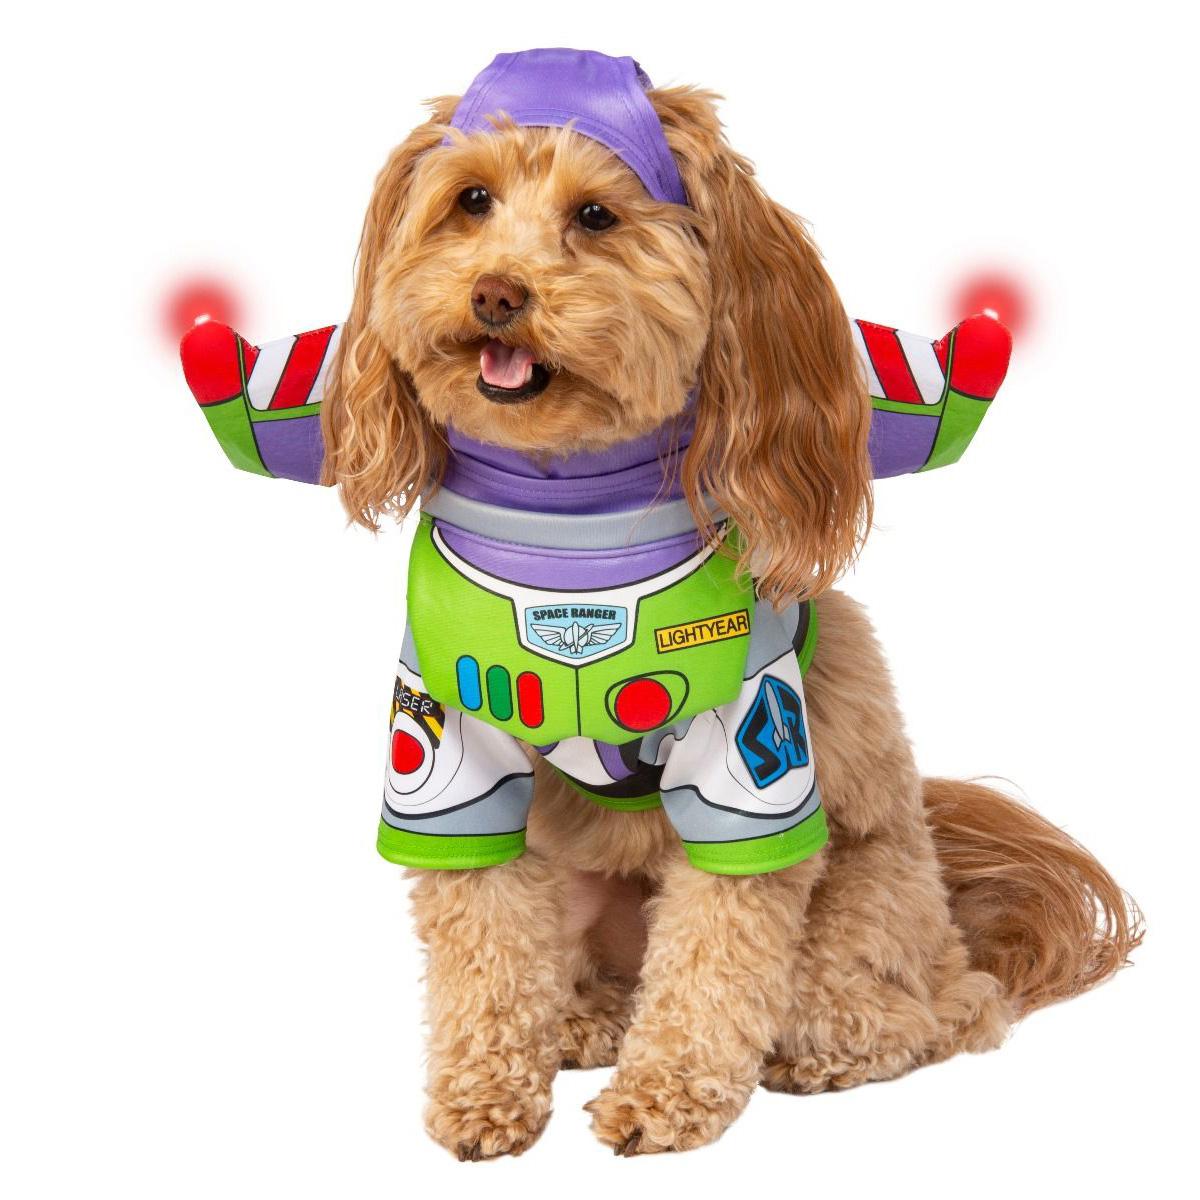 Toy Story Buzz Lightyear Dog Costume by Rubies